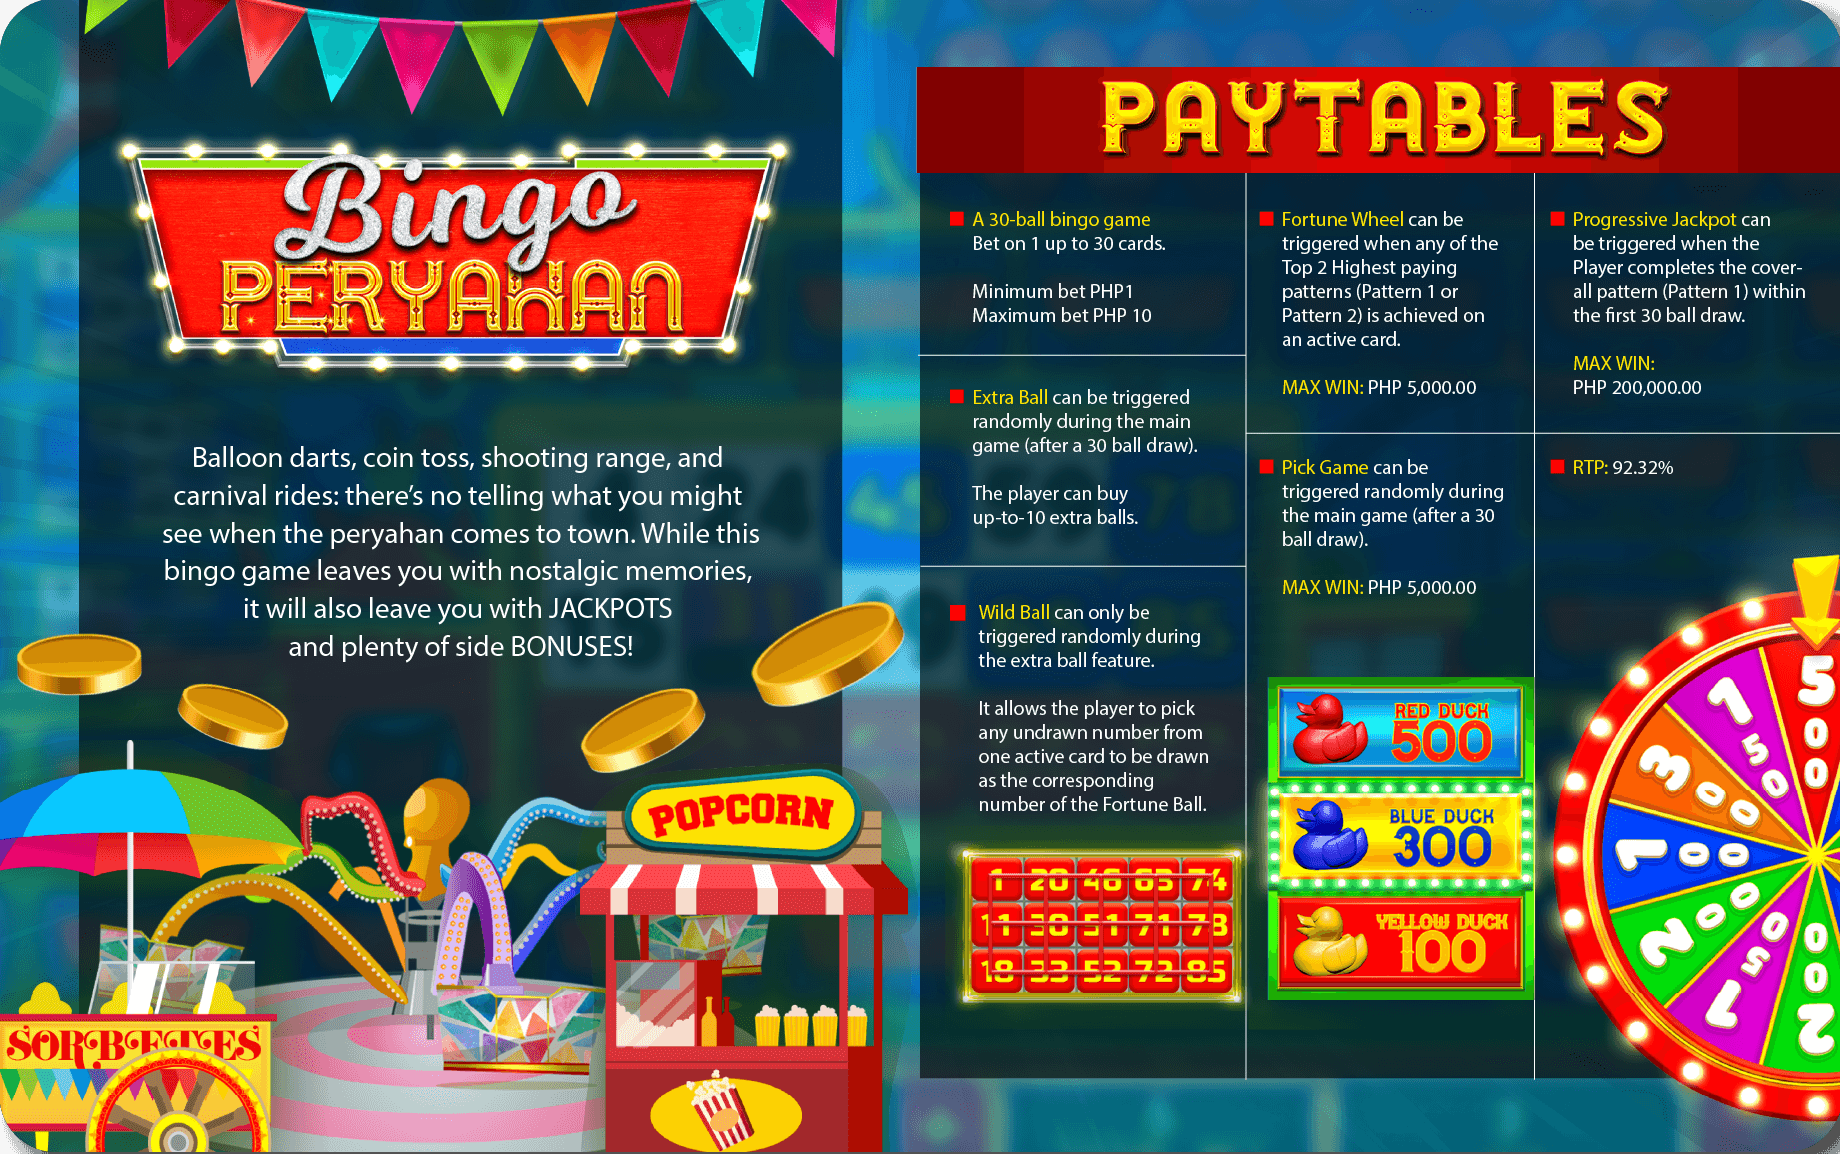 https://dynastygaming.com/e-bingo-games/bingo-peryahan/